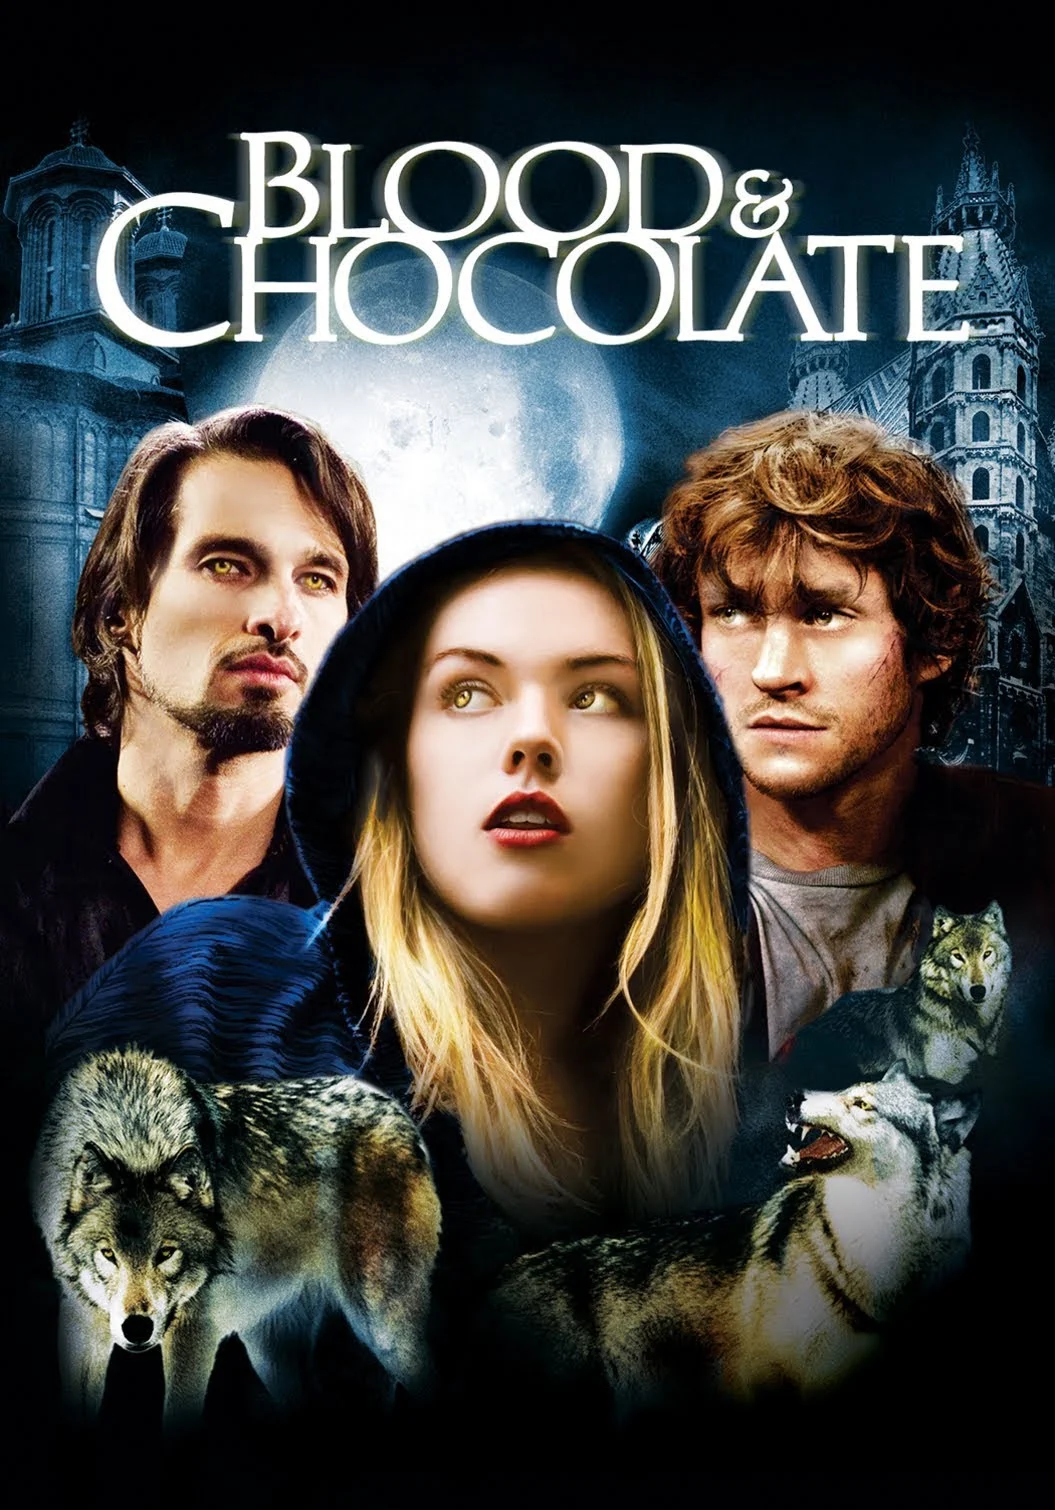 Blood & Chocolate [HD] (2007)